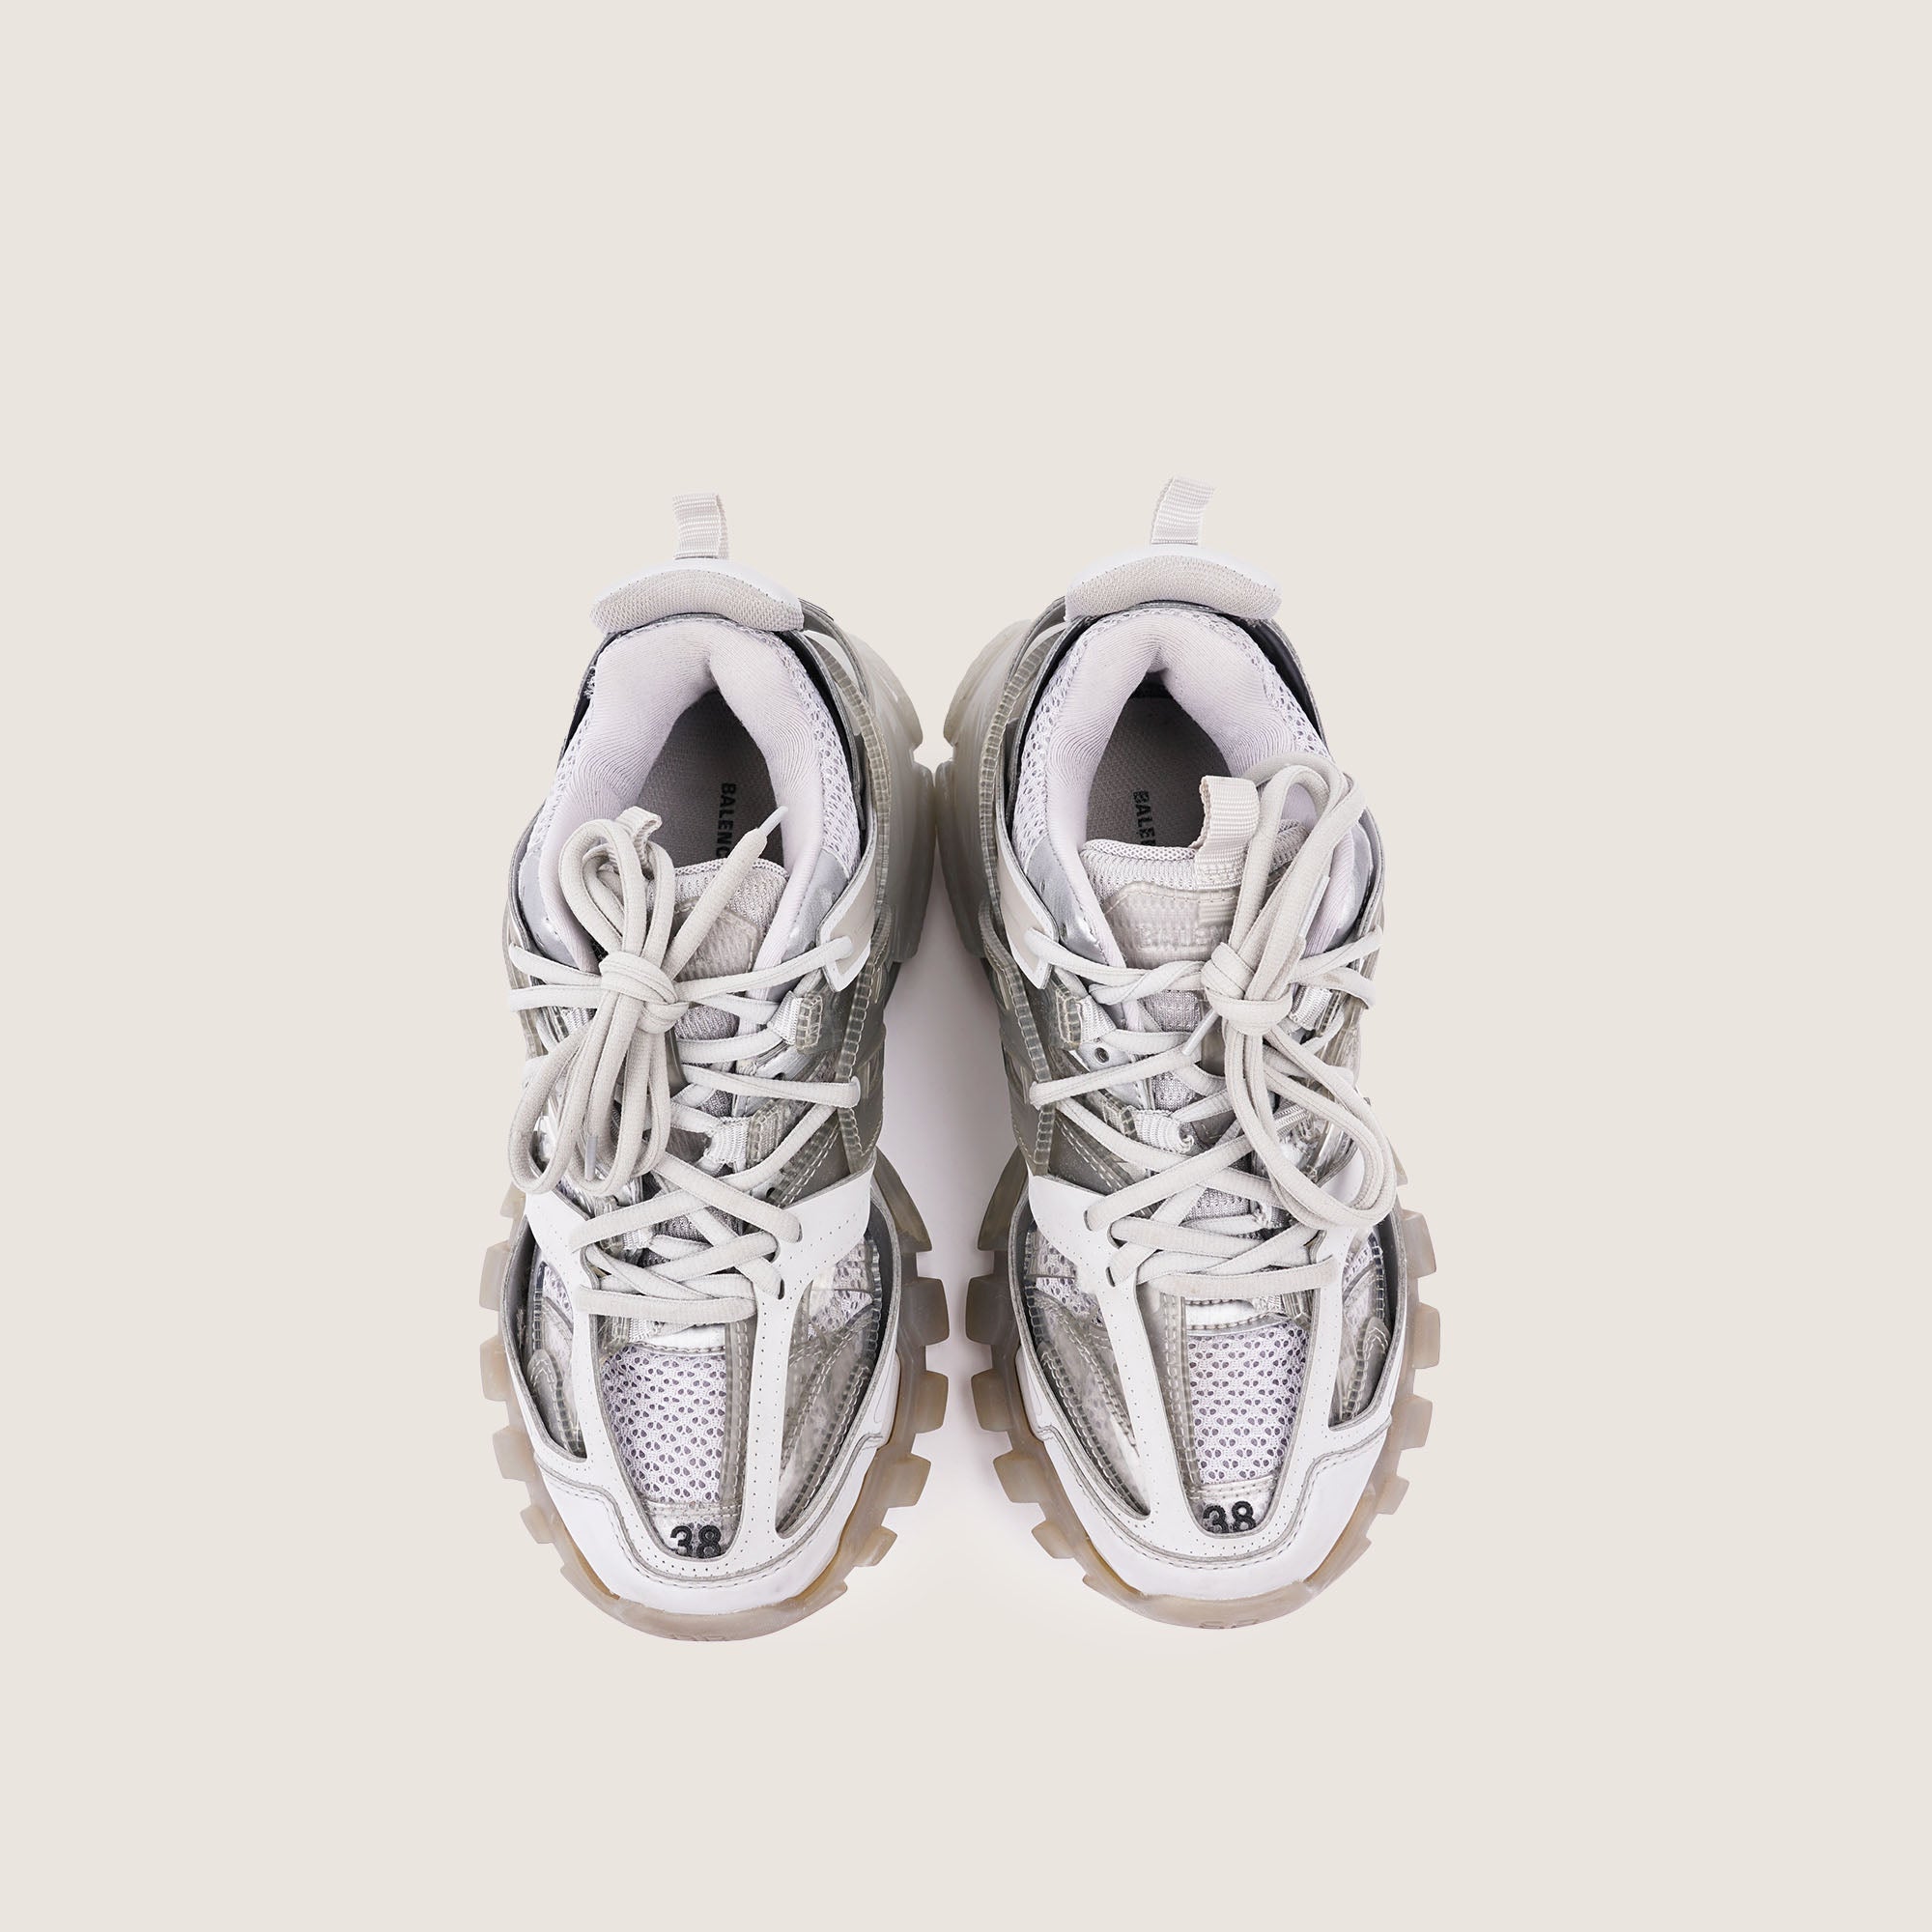 Track Sneaker Grey Nylon/ Mesh 38 - BALENCIAGA - Affordable Luxury image